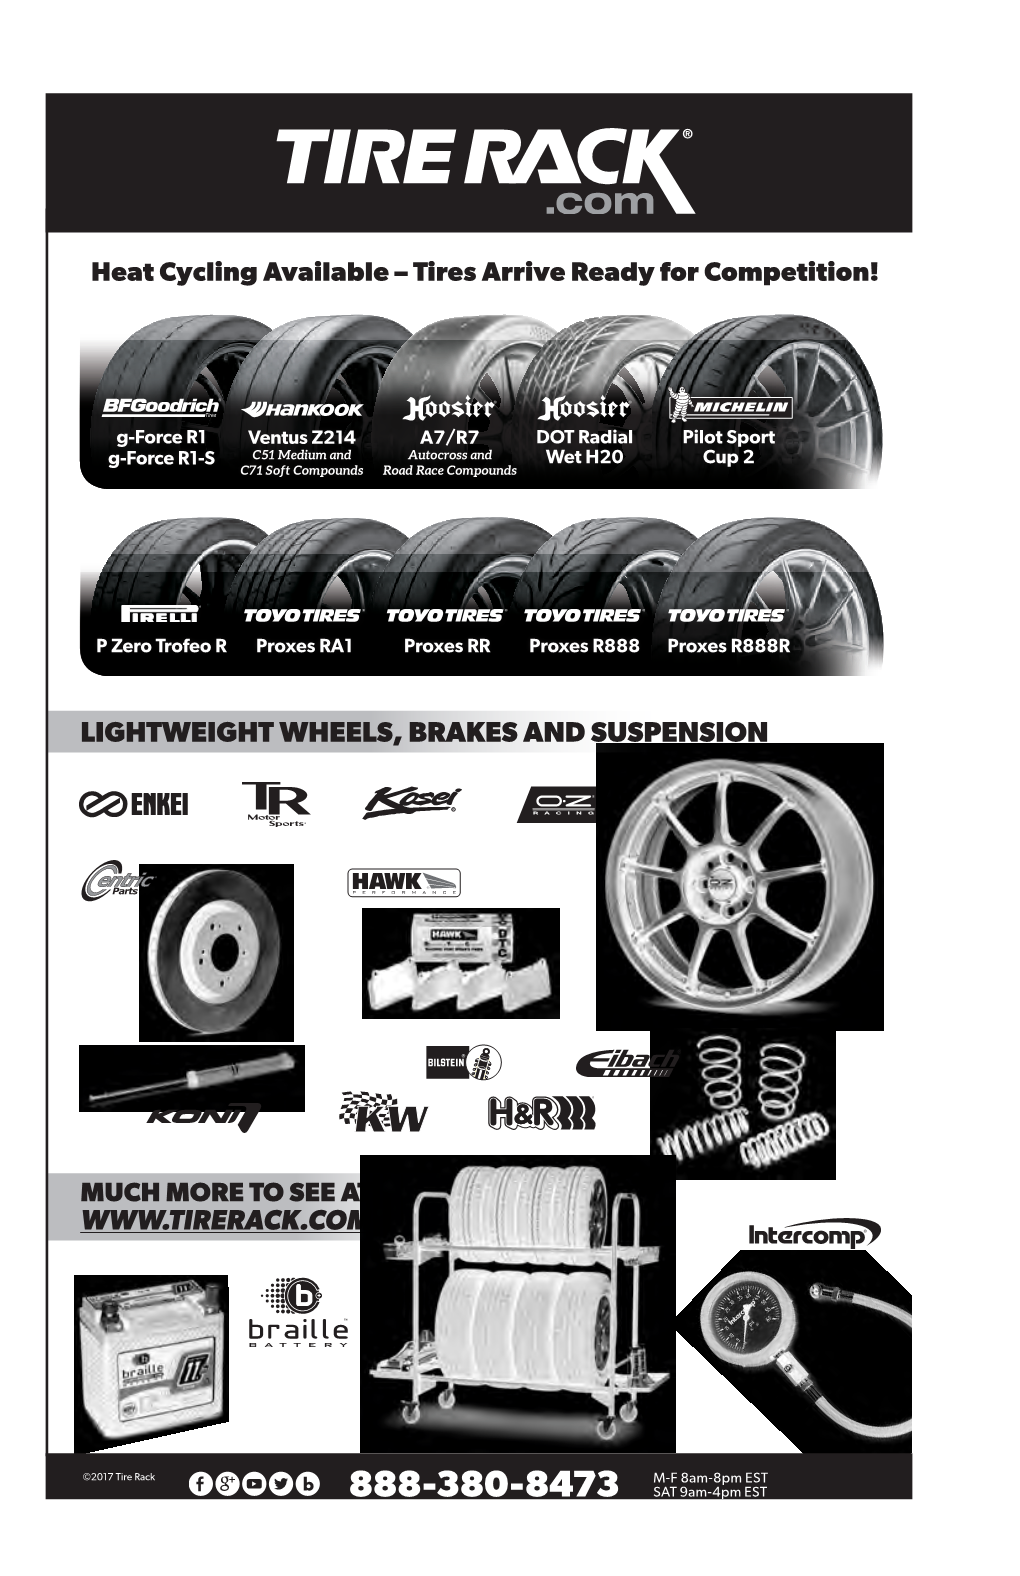 Lightweight Wheels, Brakes and Suspension